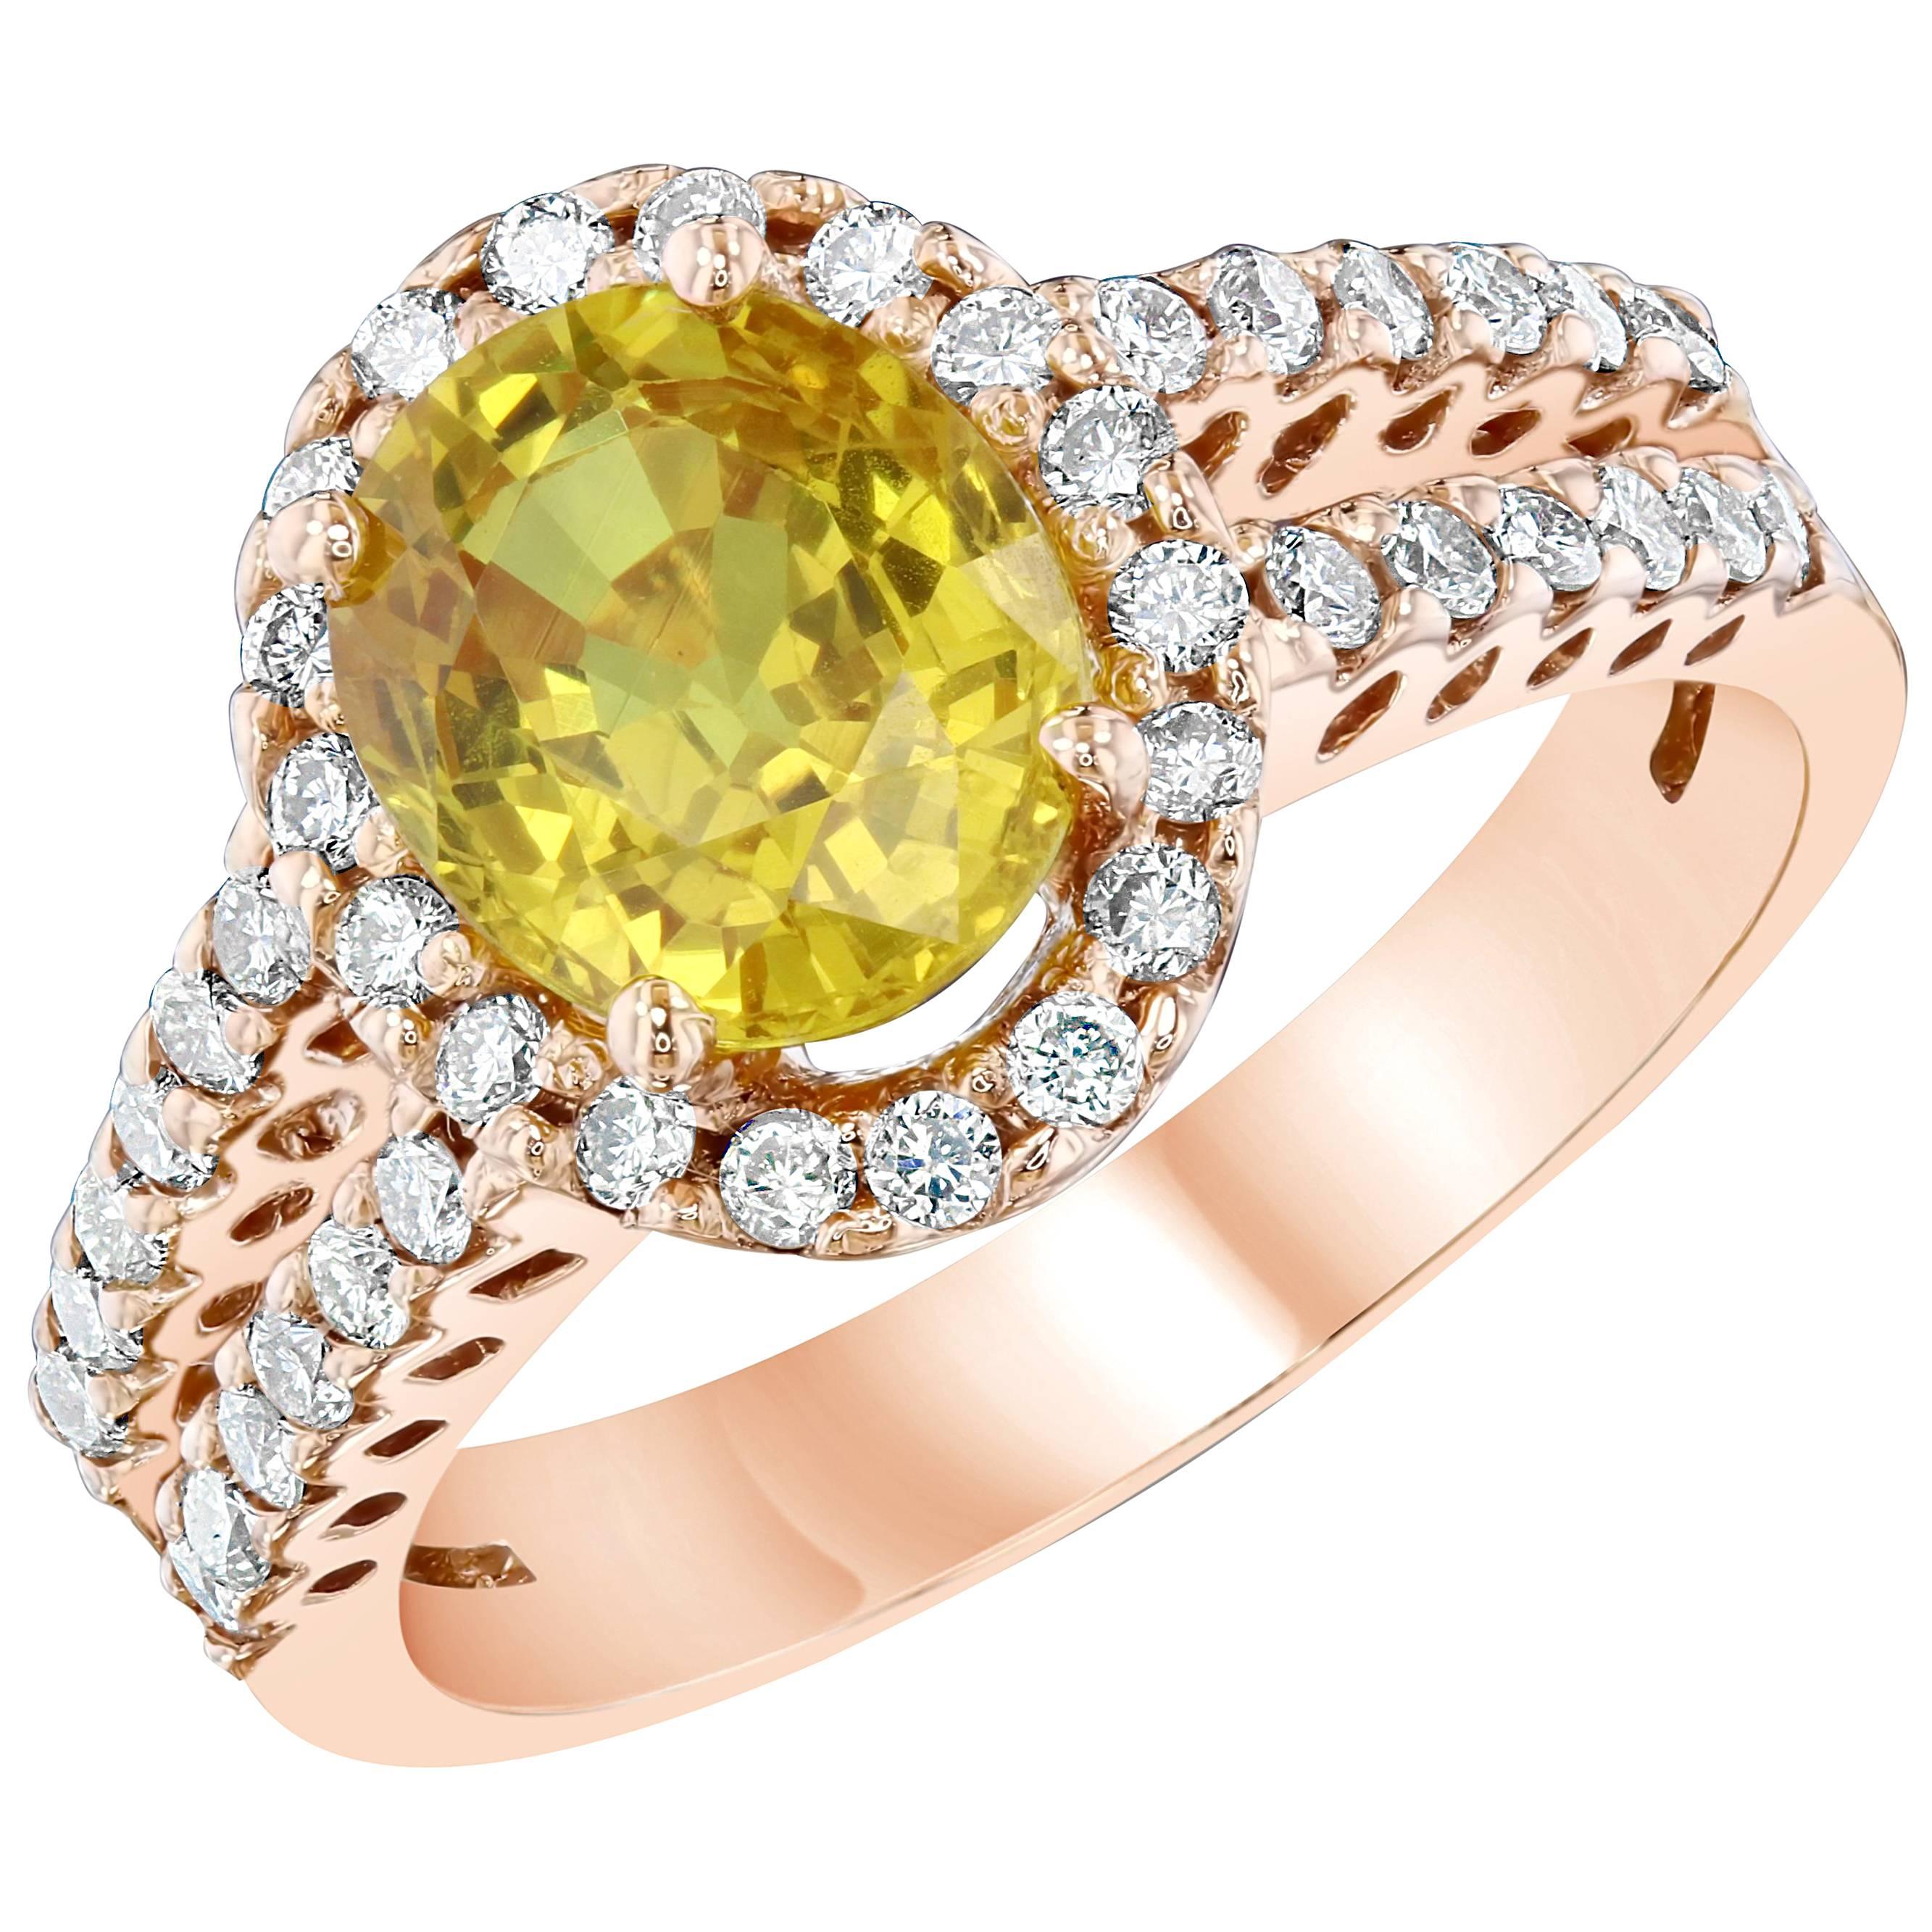 3.29 Carat Yellow Sapphire Diamond Rose Gold Ring